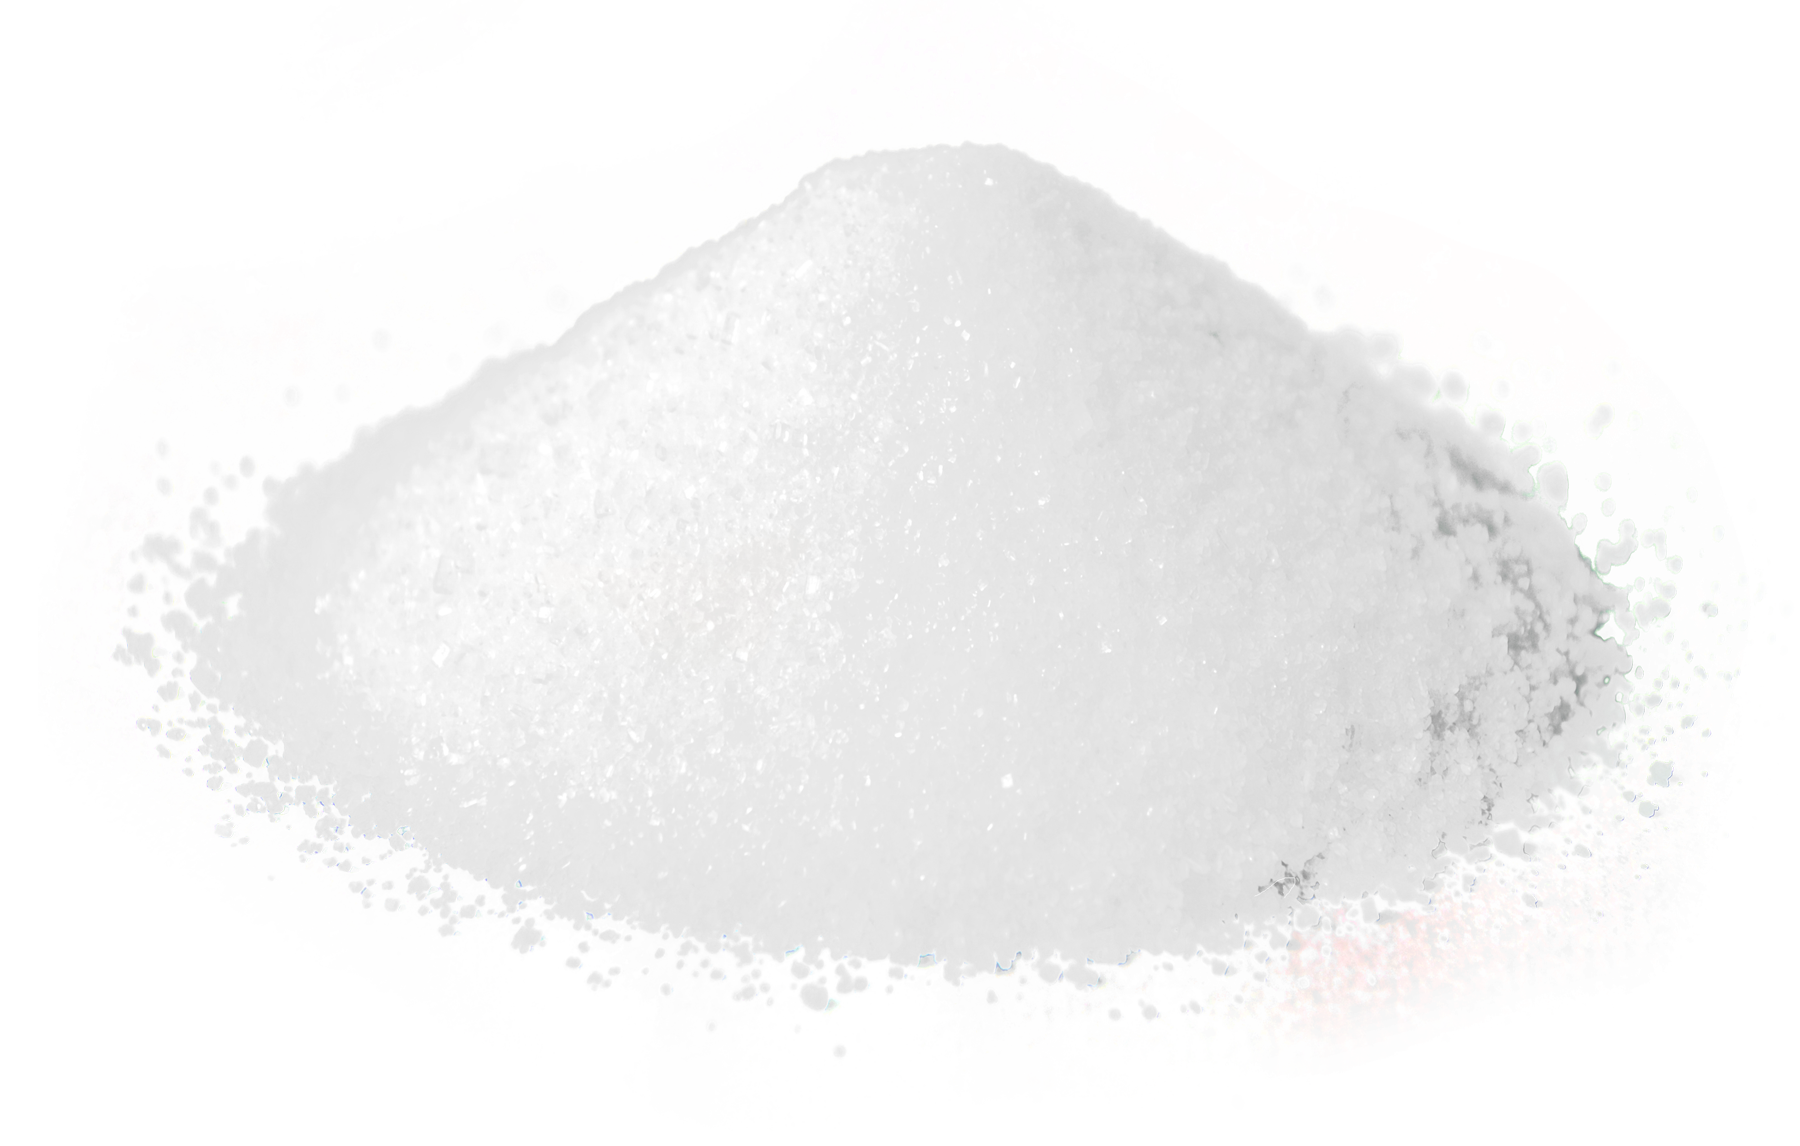 salt, sugar png transparent image pngpix #23496